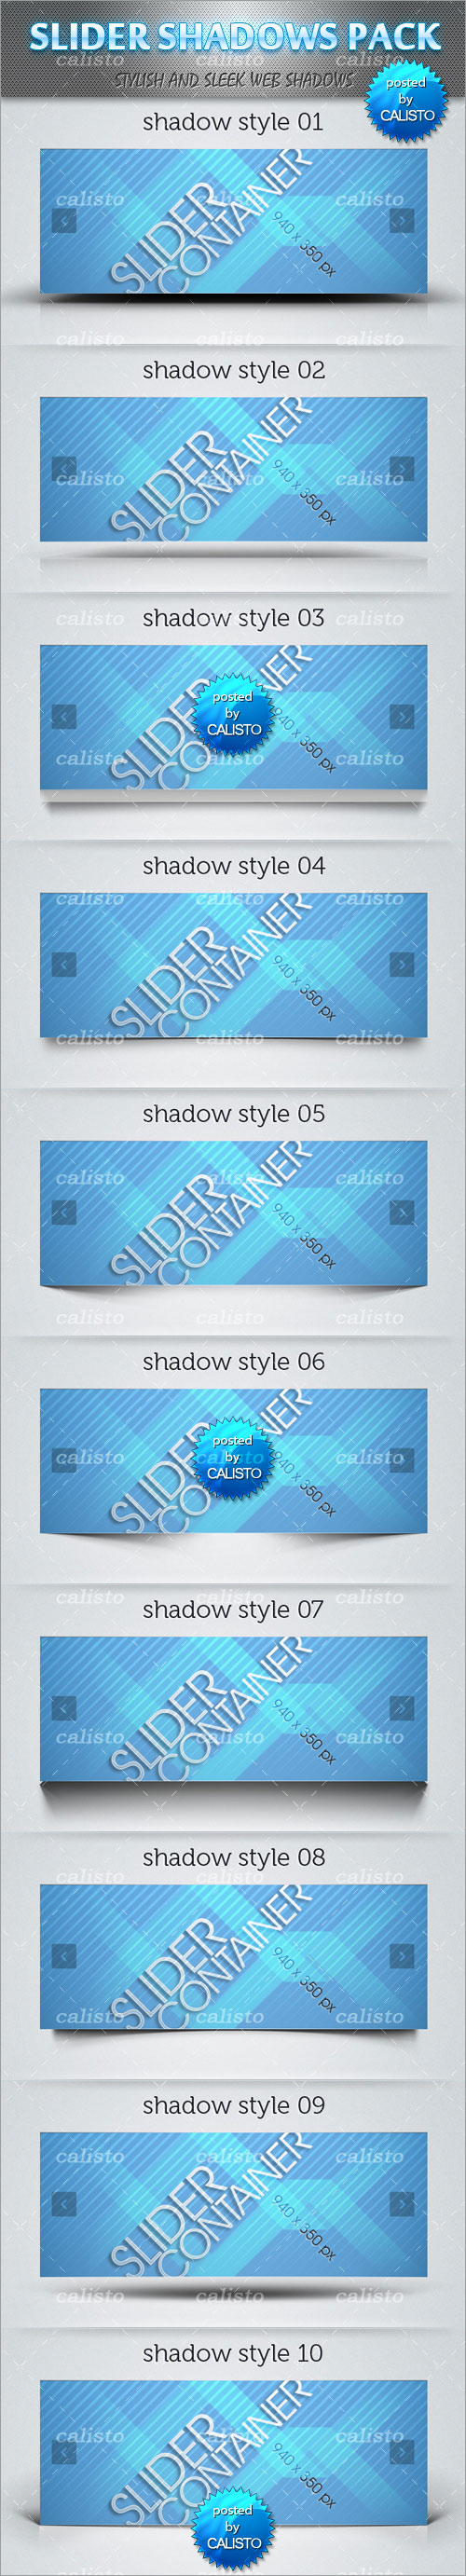 Web Slider Shadows Pack